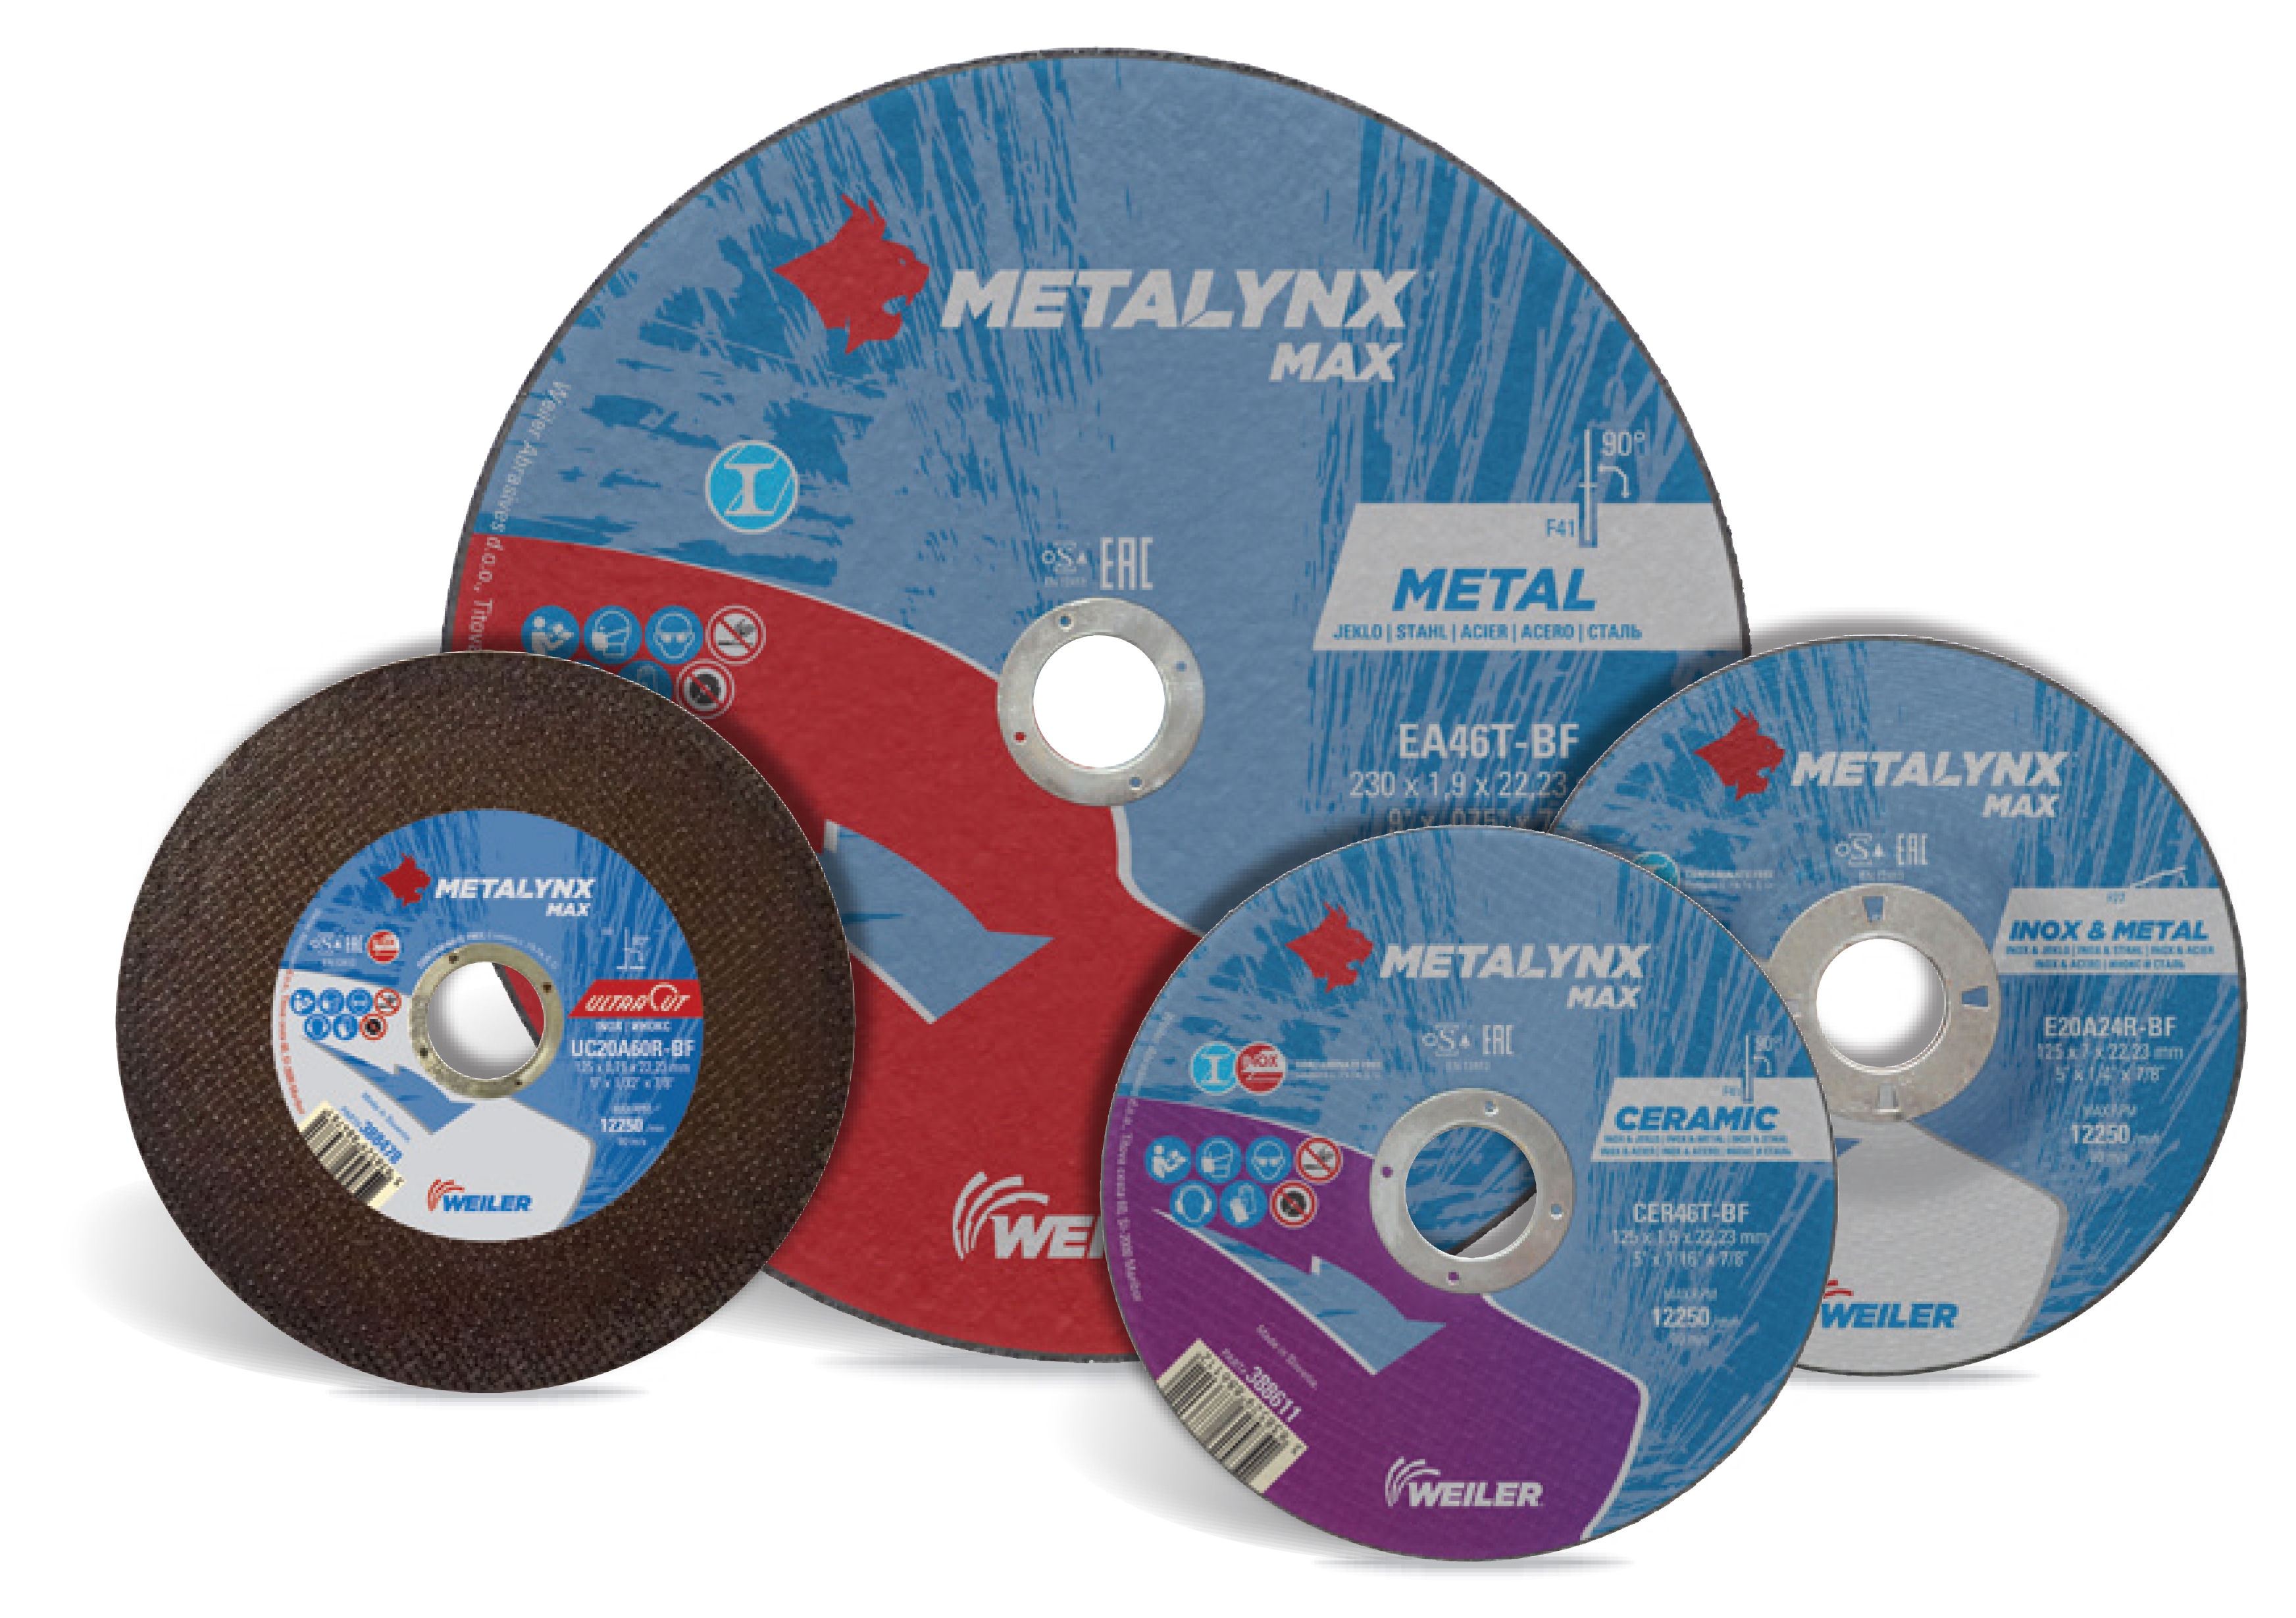 Metalynx max products